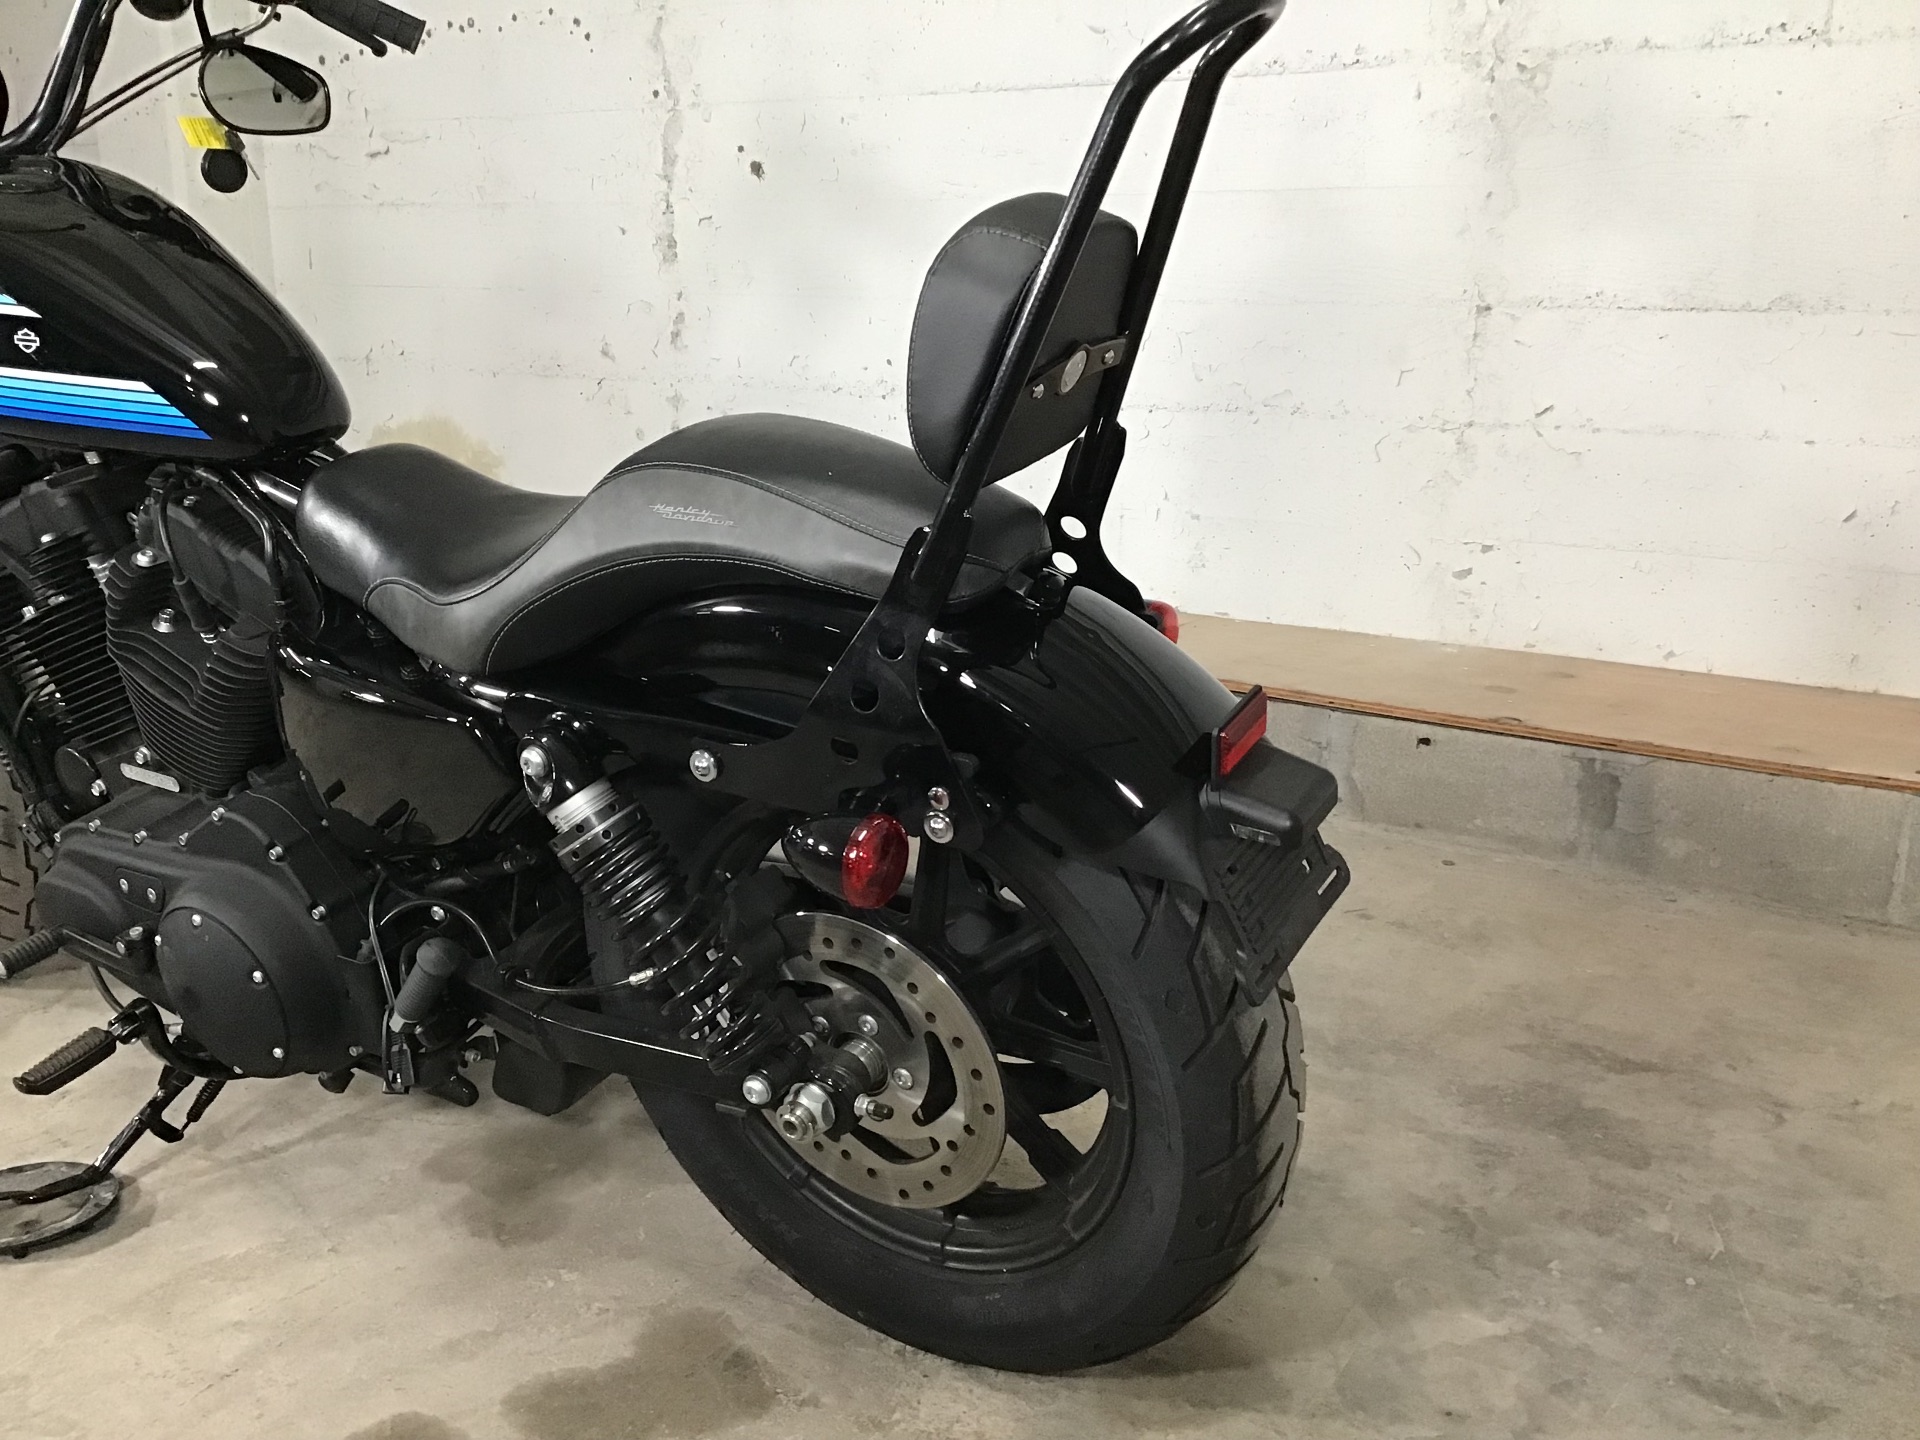 2019 Harley-Davidson Iron 1200™ in San Francisco, California - Photo 9